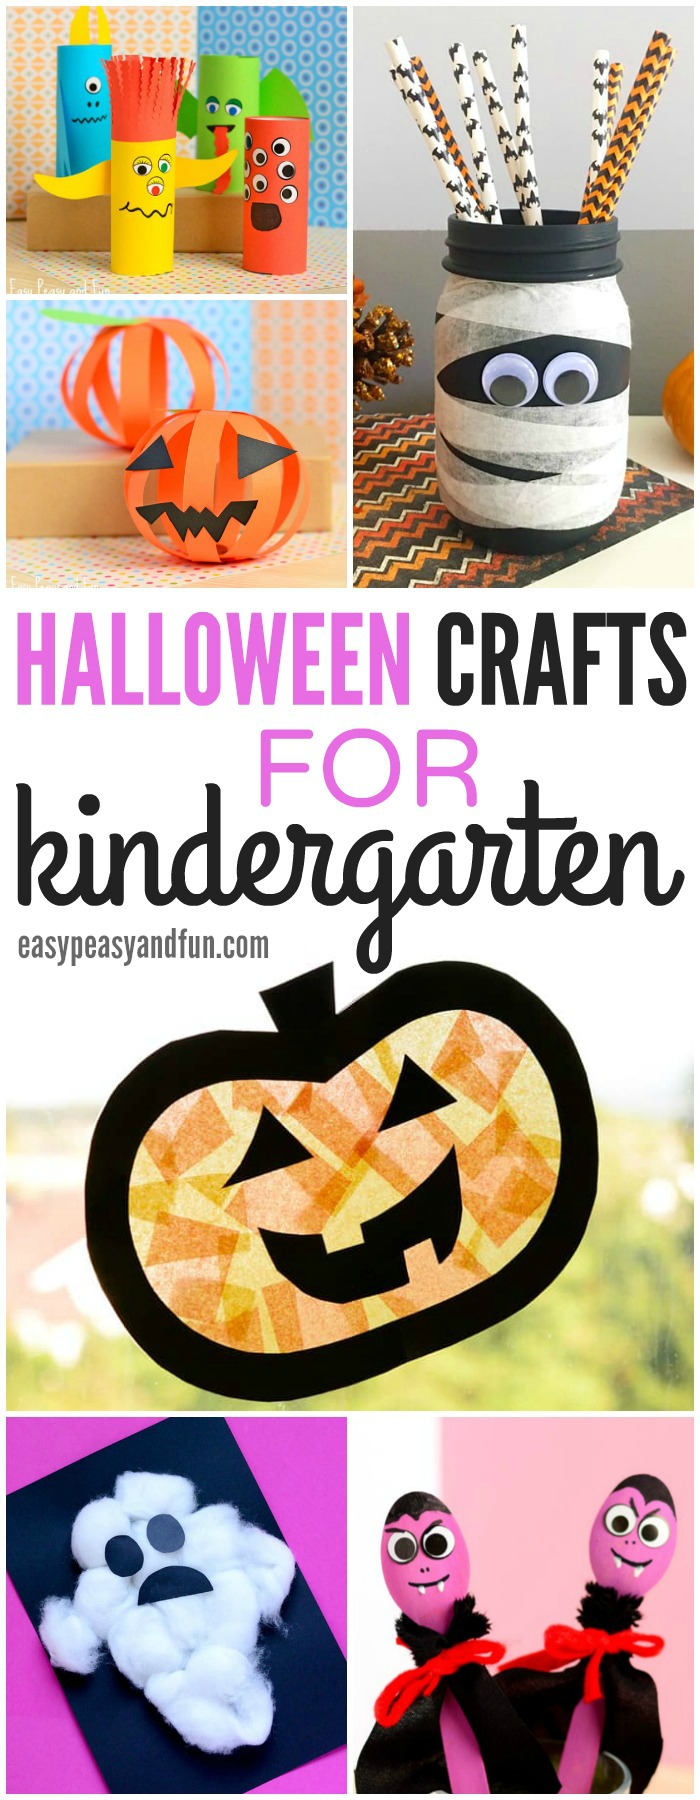 Fun and Simple Halloween Crafts for Kindergarten